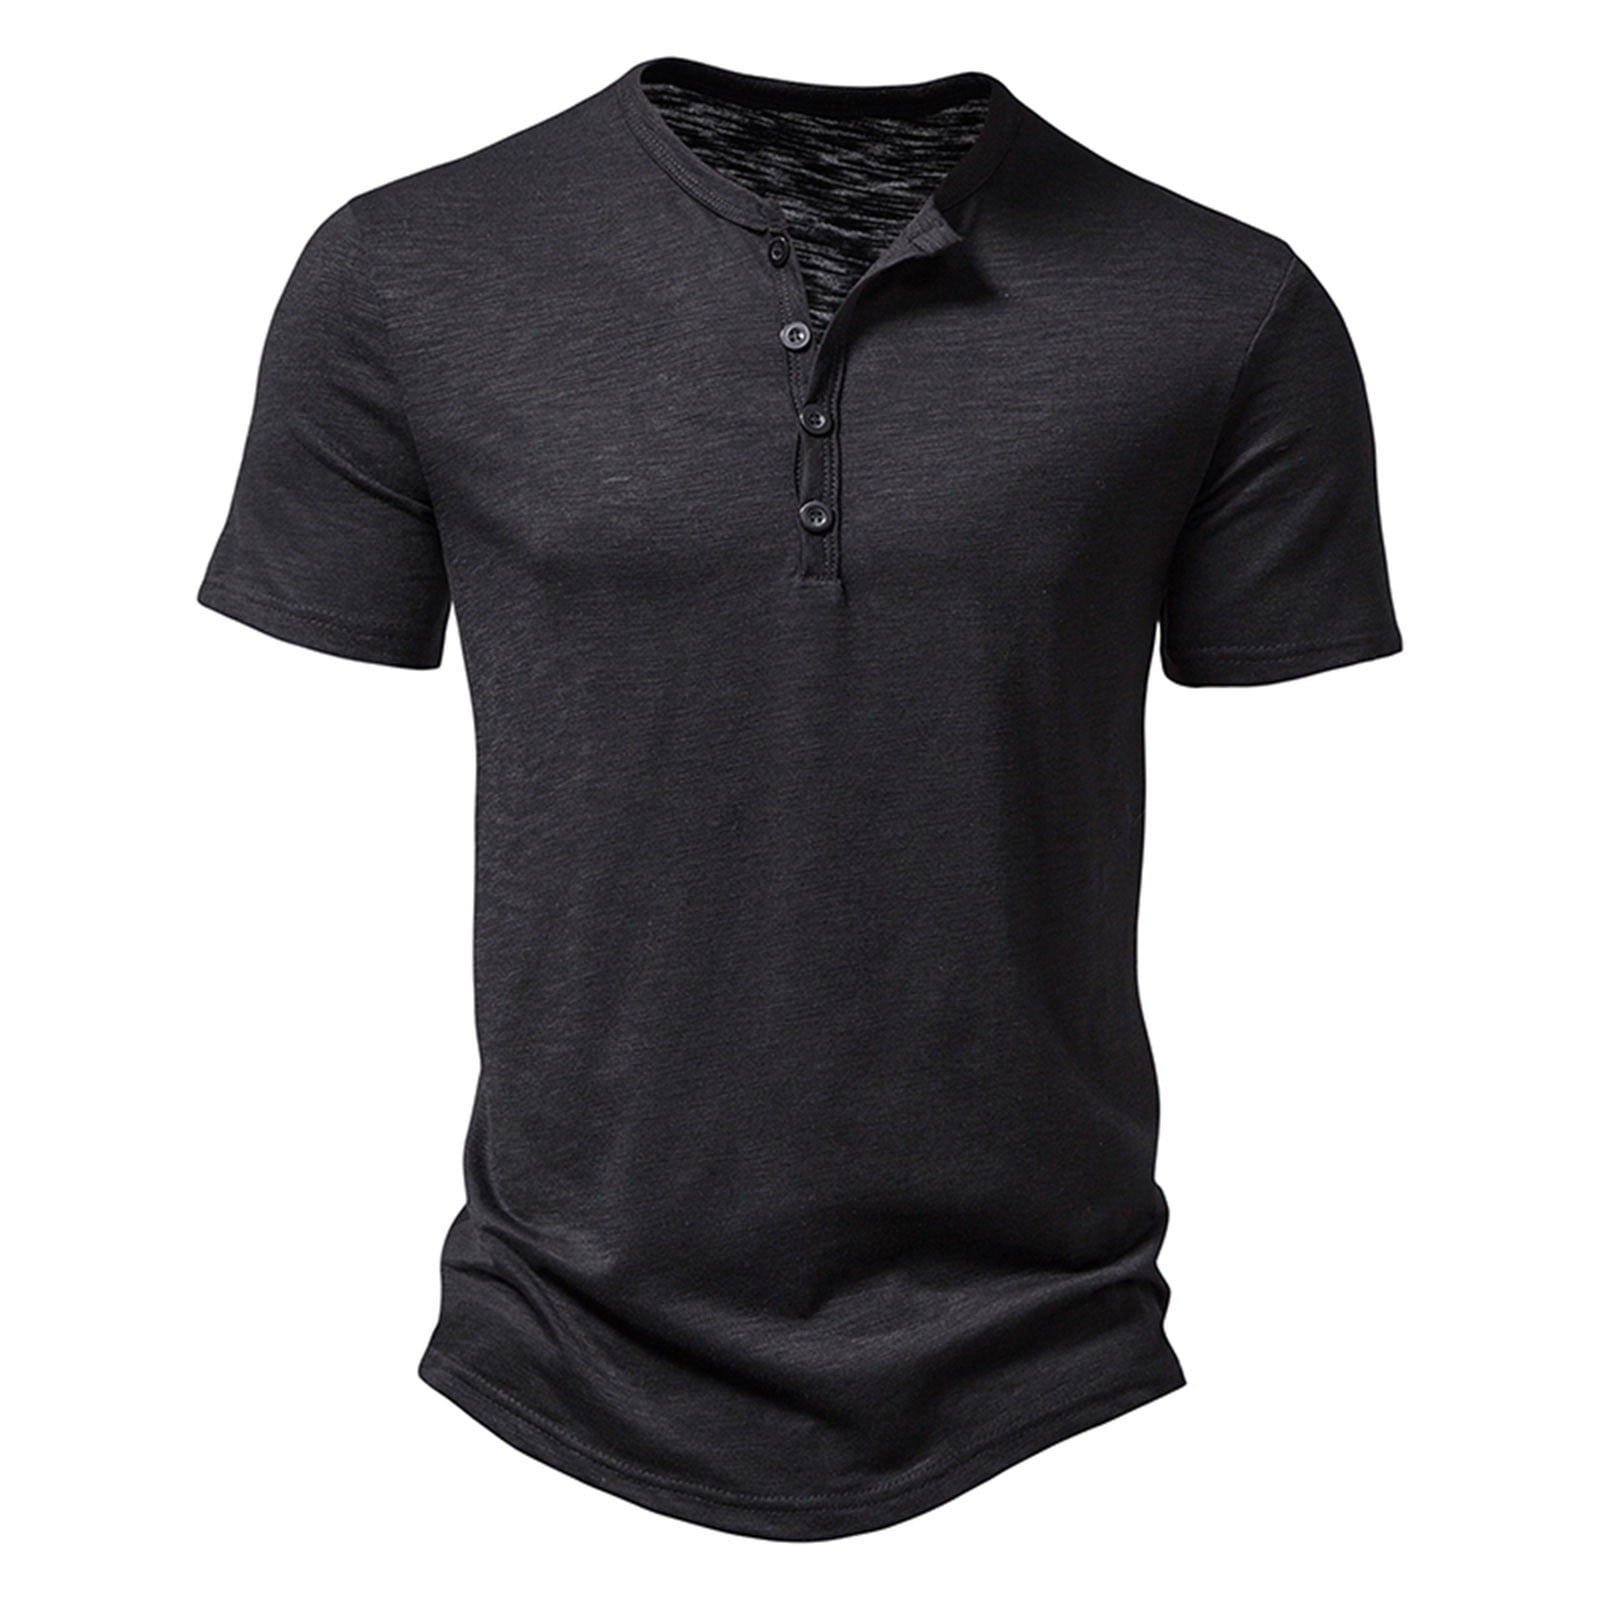 HangTaiLei Men's Muscle Shirts Slim Fit Button V Neck Henley T Shirts ...